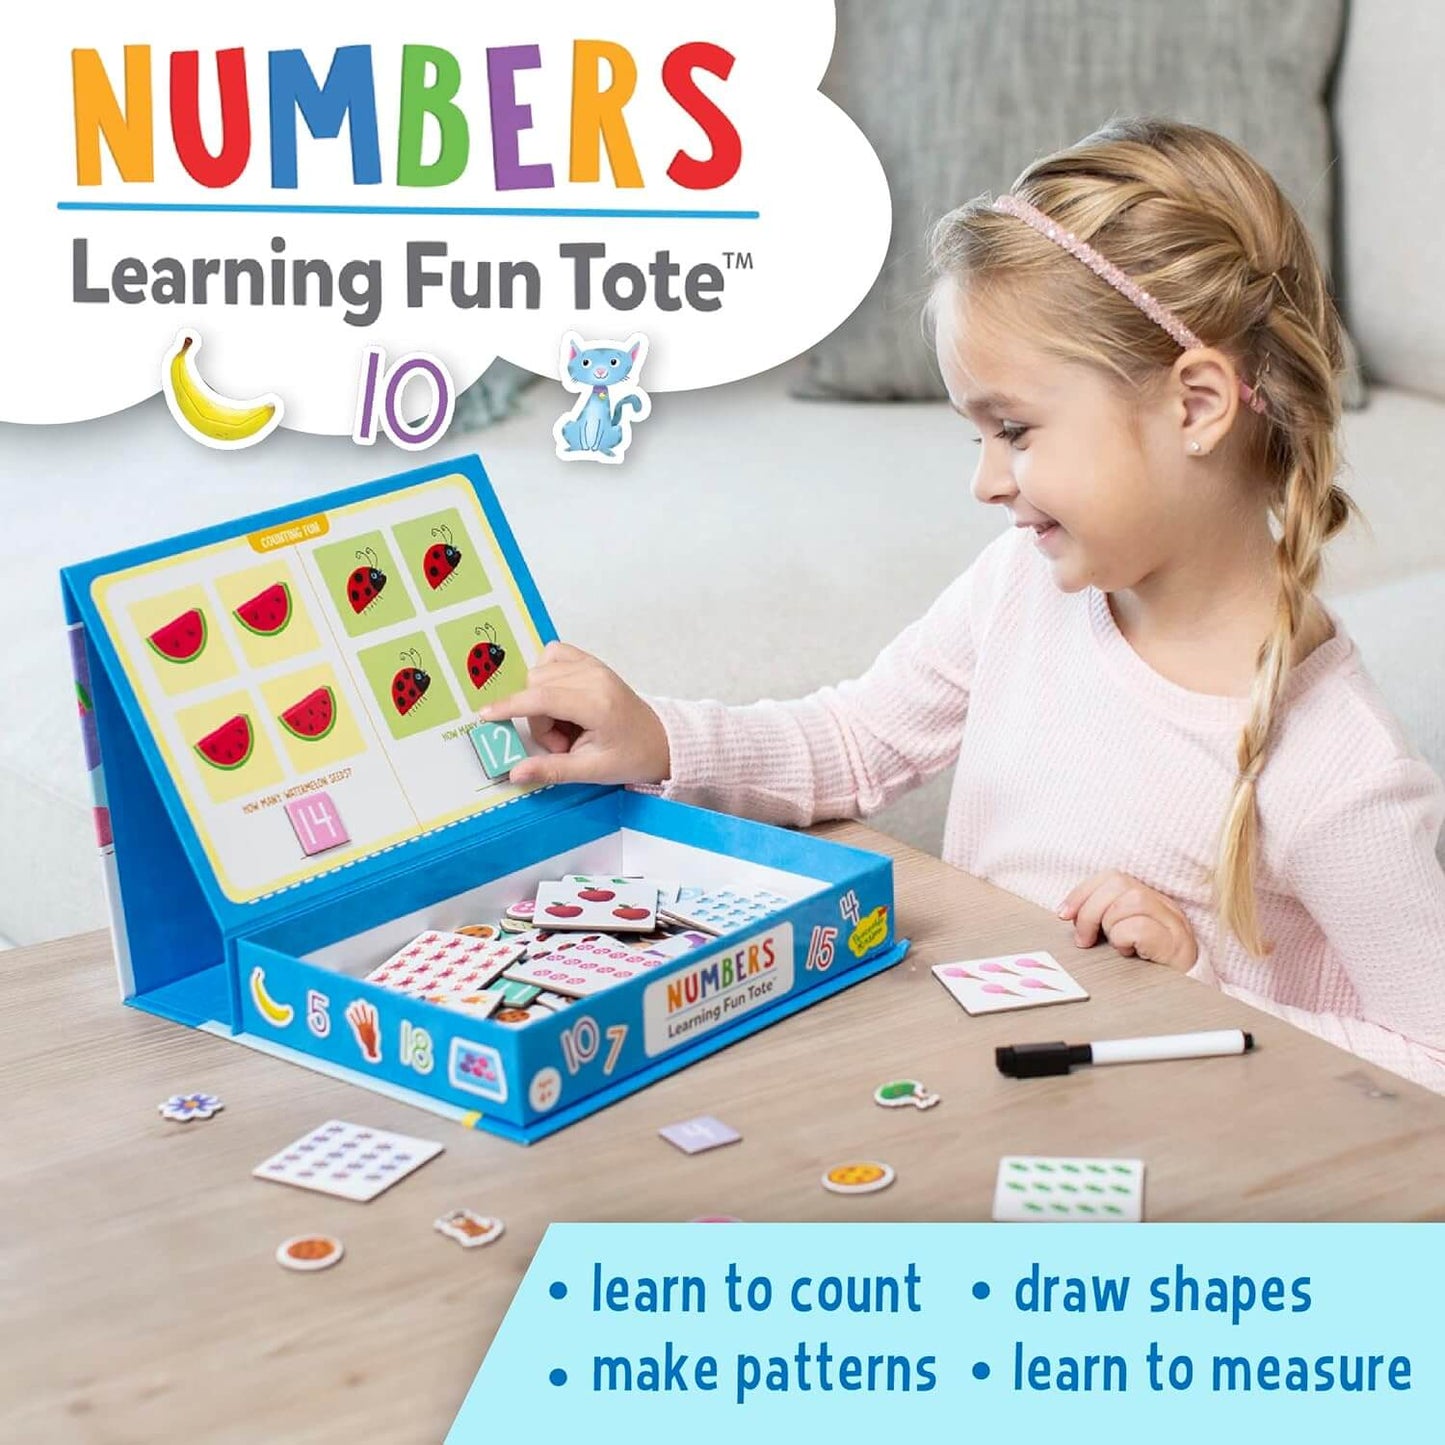 Numbers Learning Fun Tote